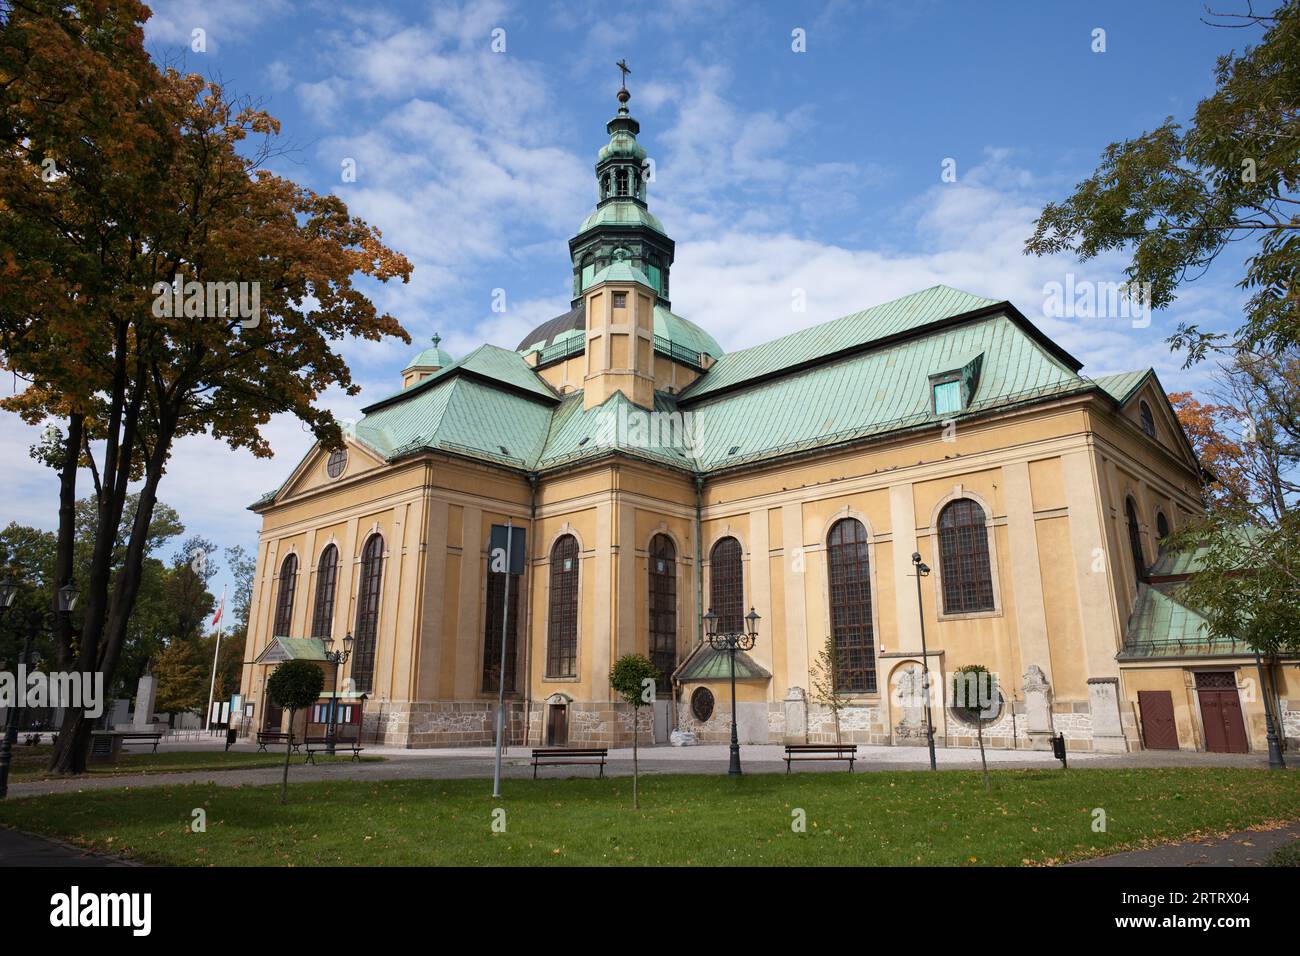 Holy Cross Church in Jelenia Gora, Lower Silesia, Poland, 18th century city landmark Stock Photo